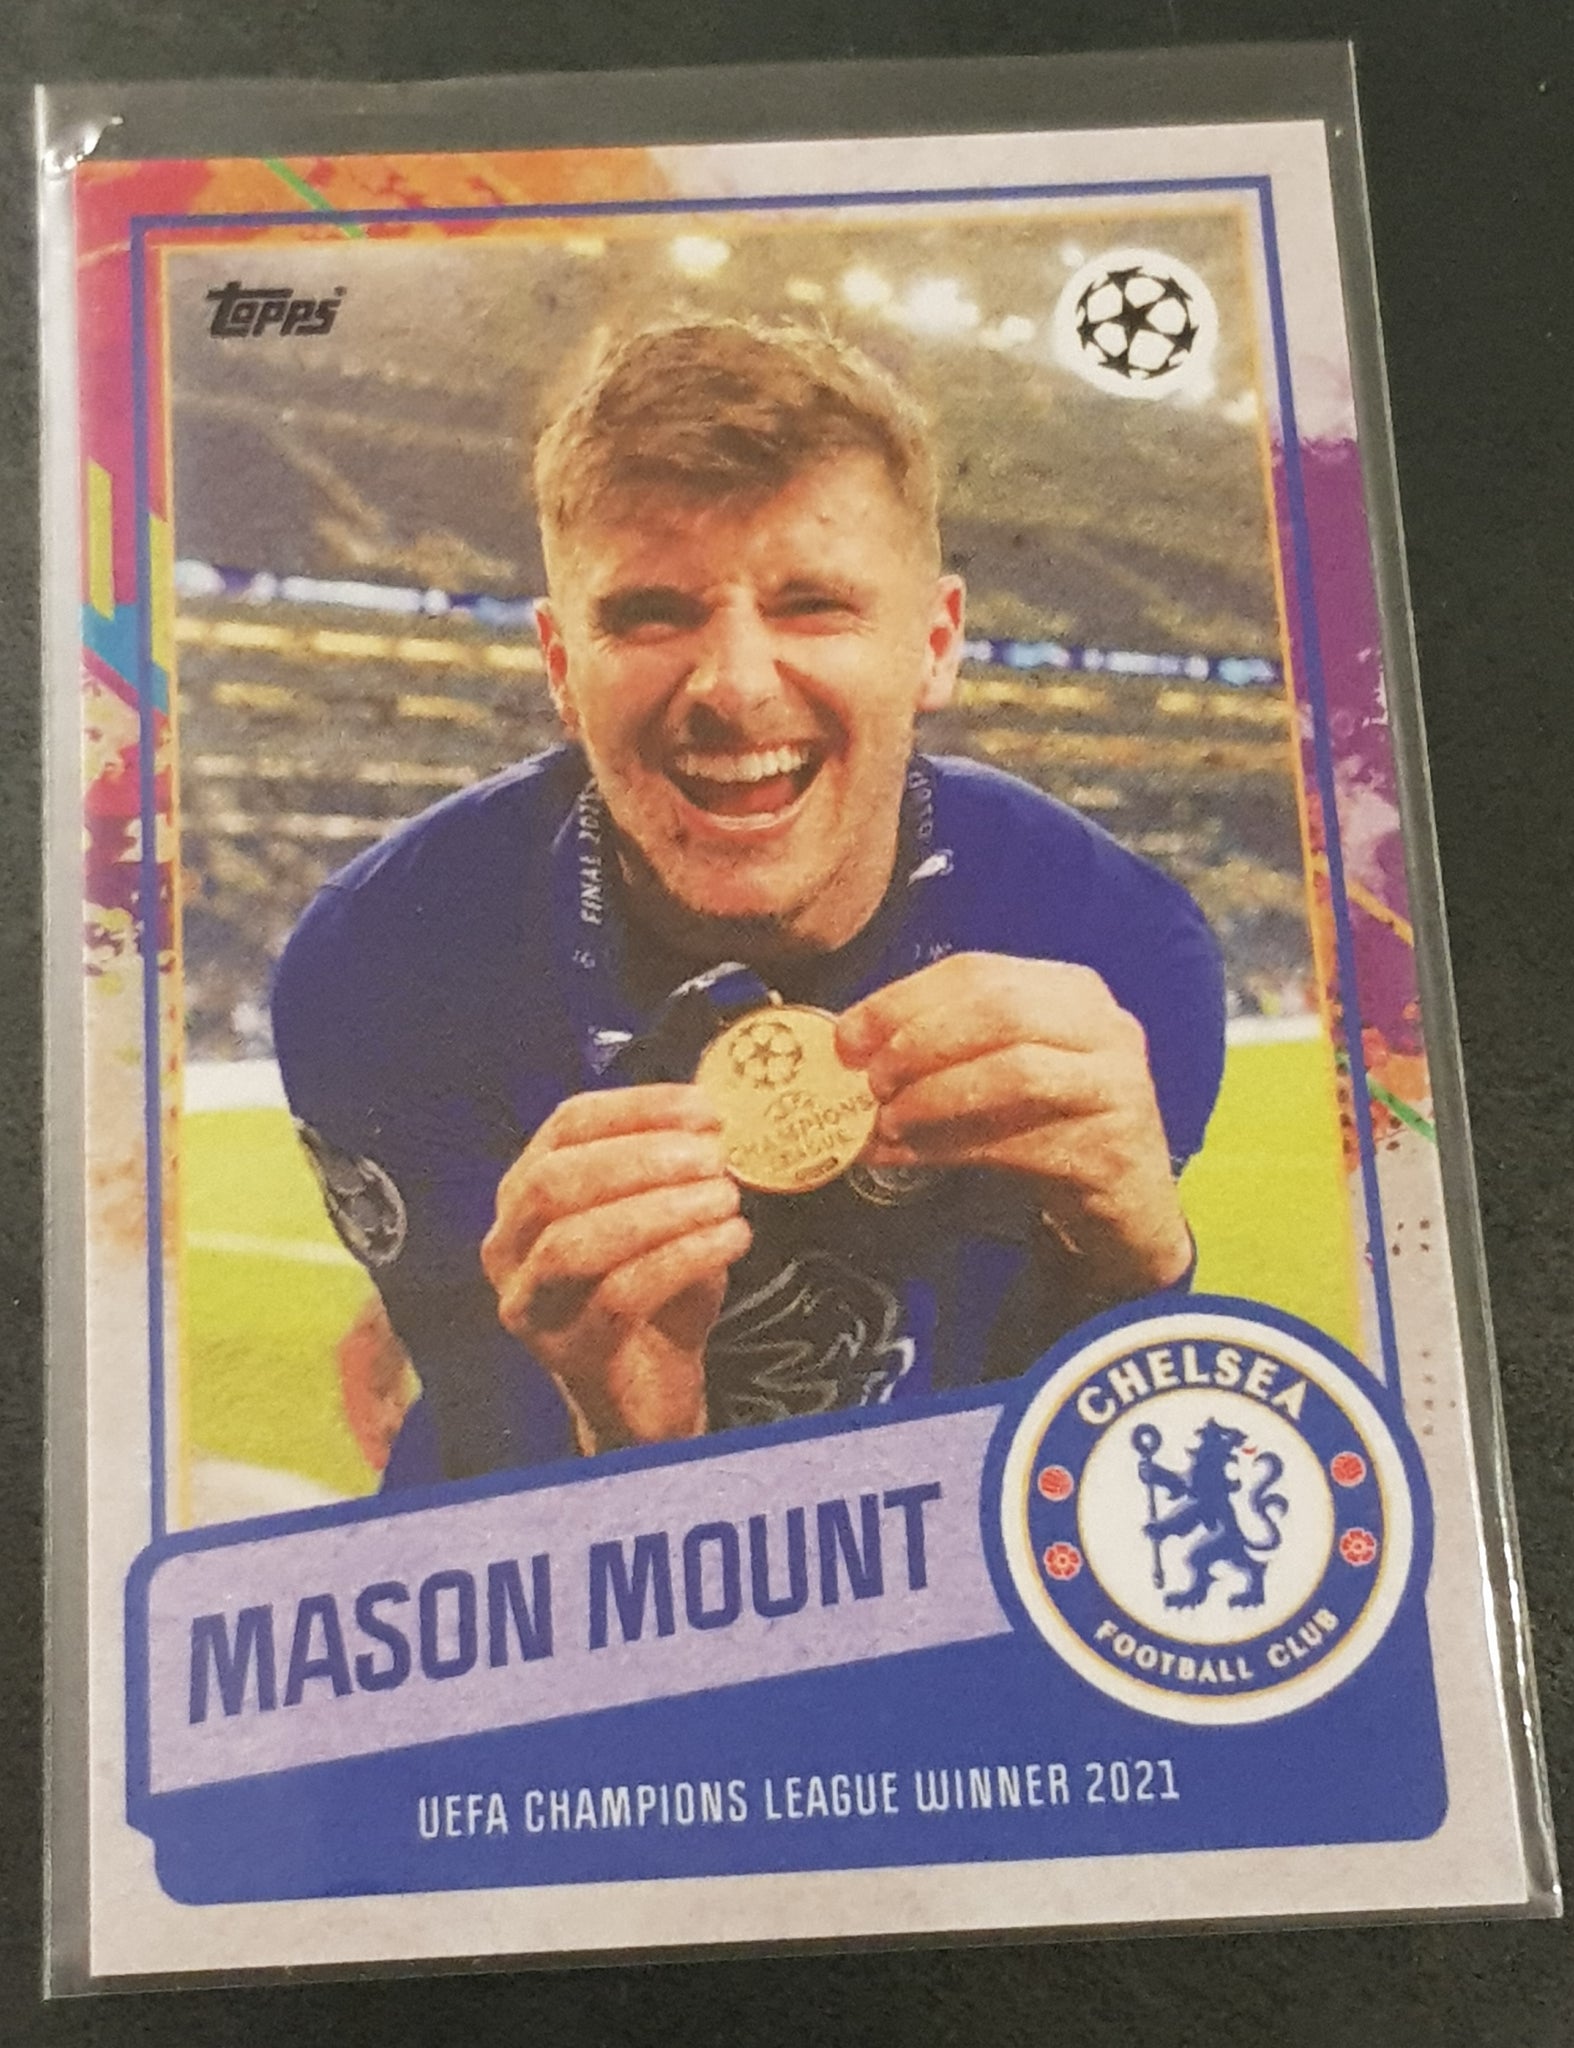 Future Champions by Mason Mount Trading Card